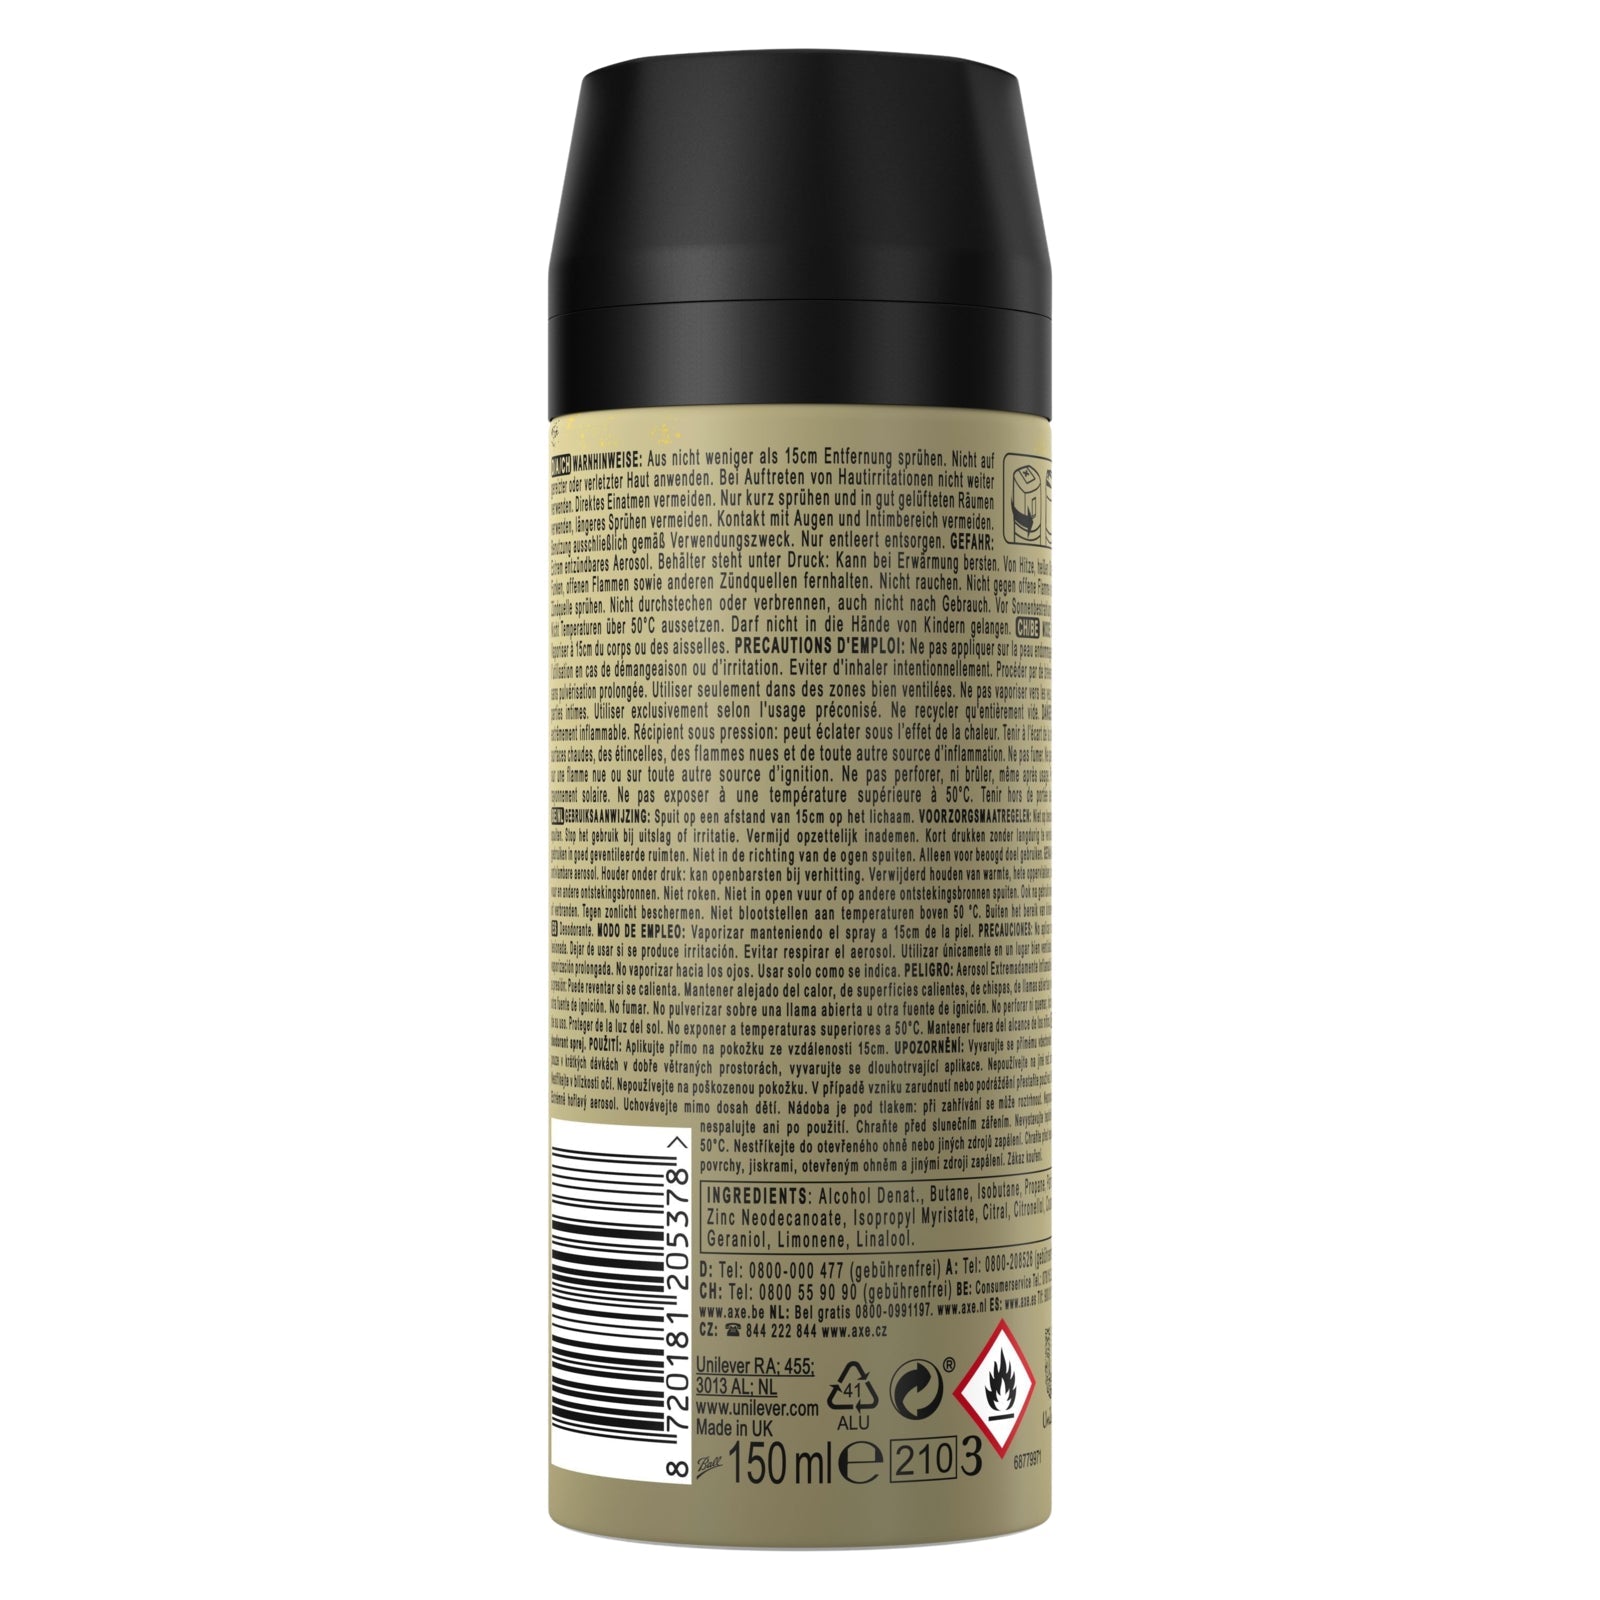 Axe  Bodyspray Gold Caramel Billionaire Limited Edition 150 ml